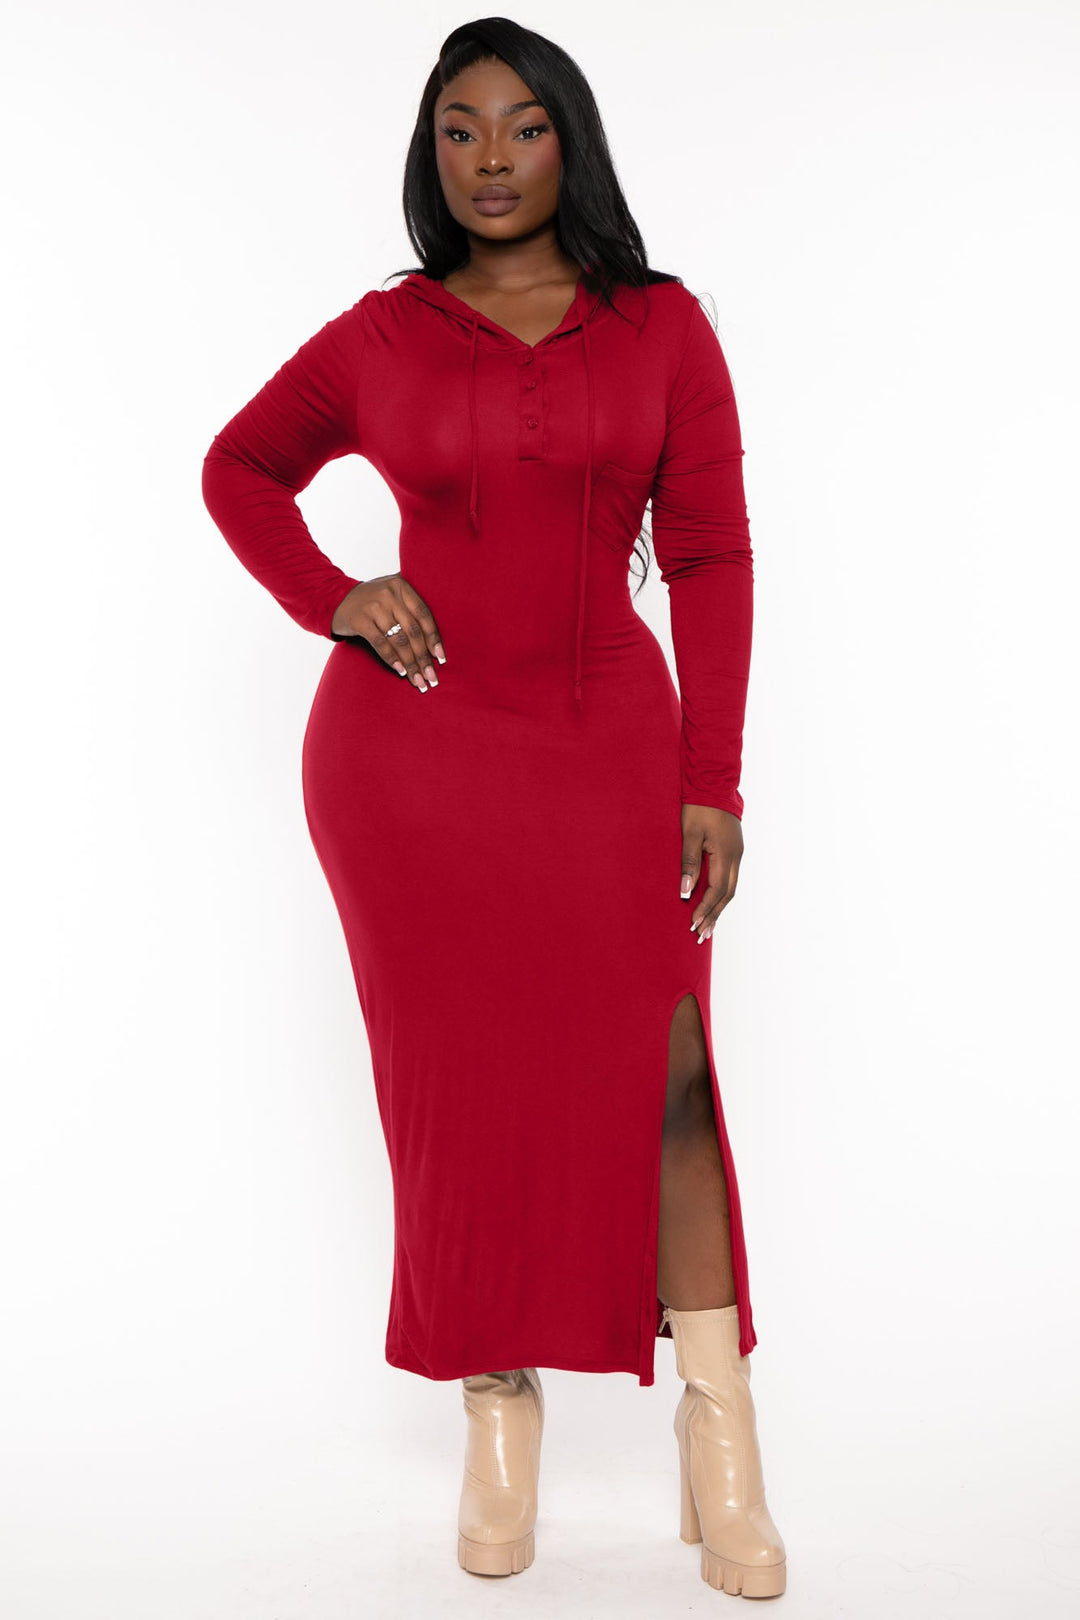 adviicd Plus Size Maxi Dress For Women Shaper Dress Bodycon Maxi